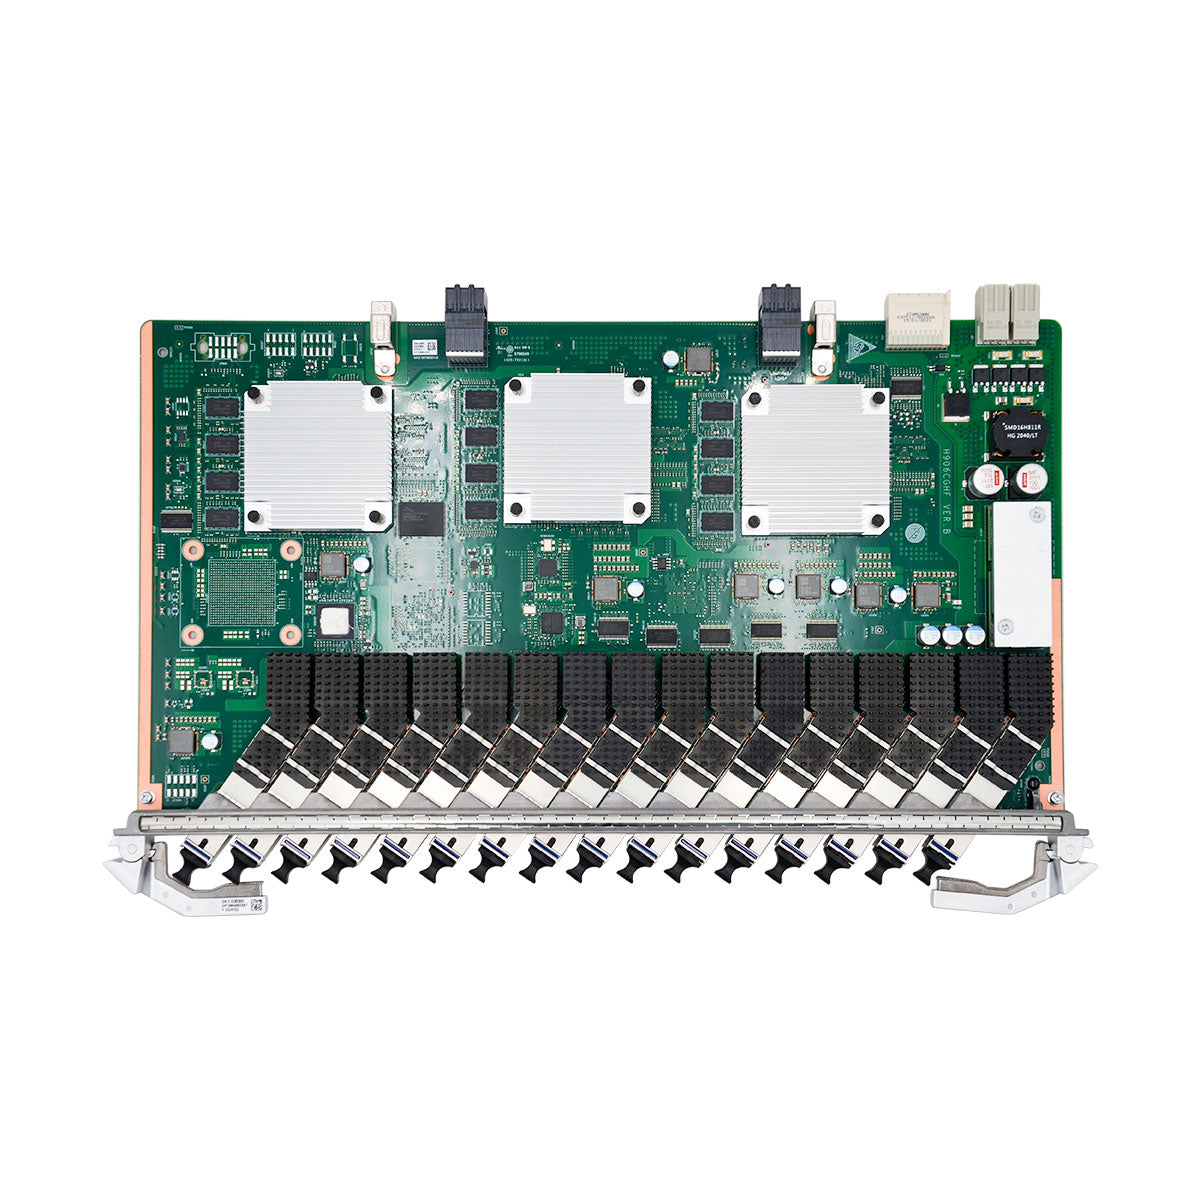 Huawei H906CGHF 16-port XG-PON and GPON combo Board for MA5800 series OLT